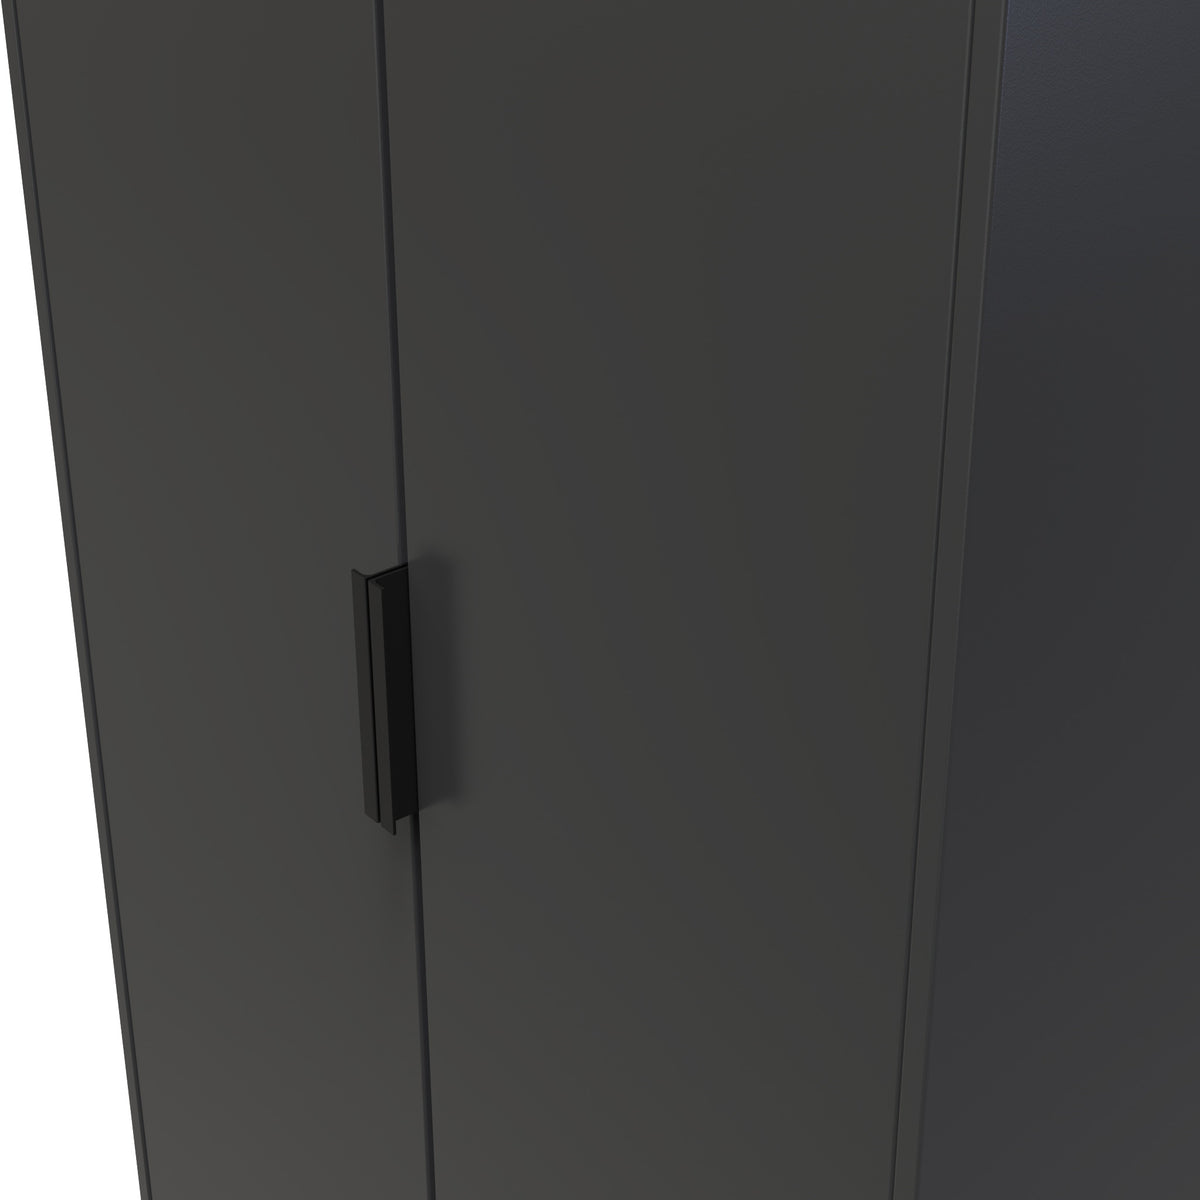 Moreno Graphite Grey 2 Door Double Wardrobe from Roseland furniture